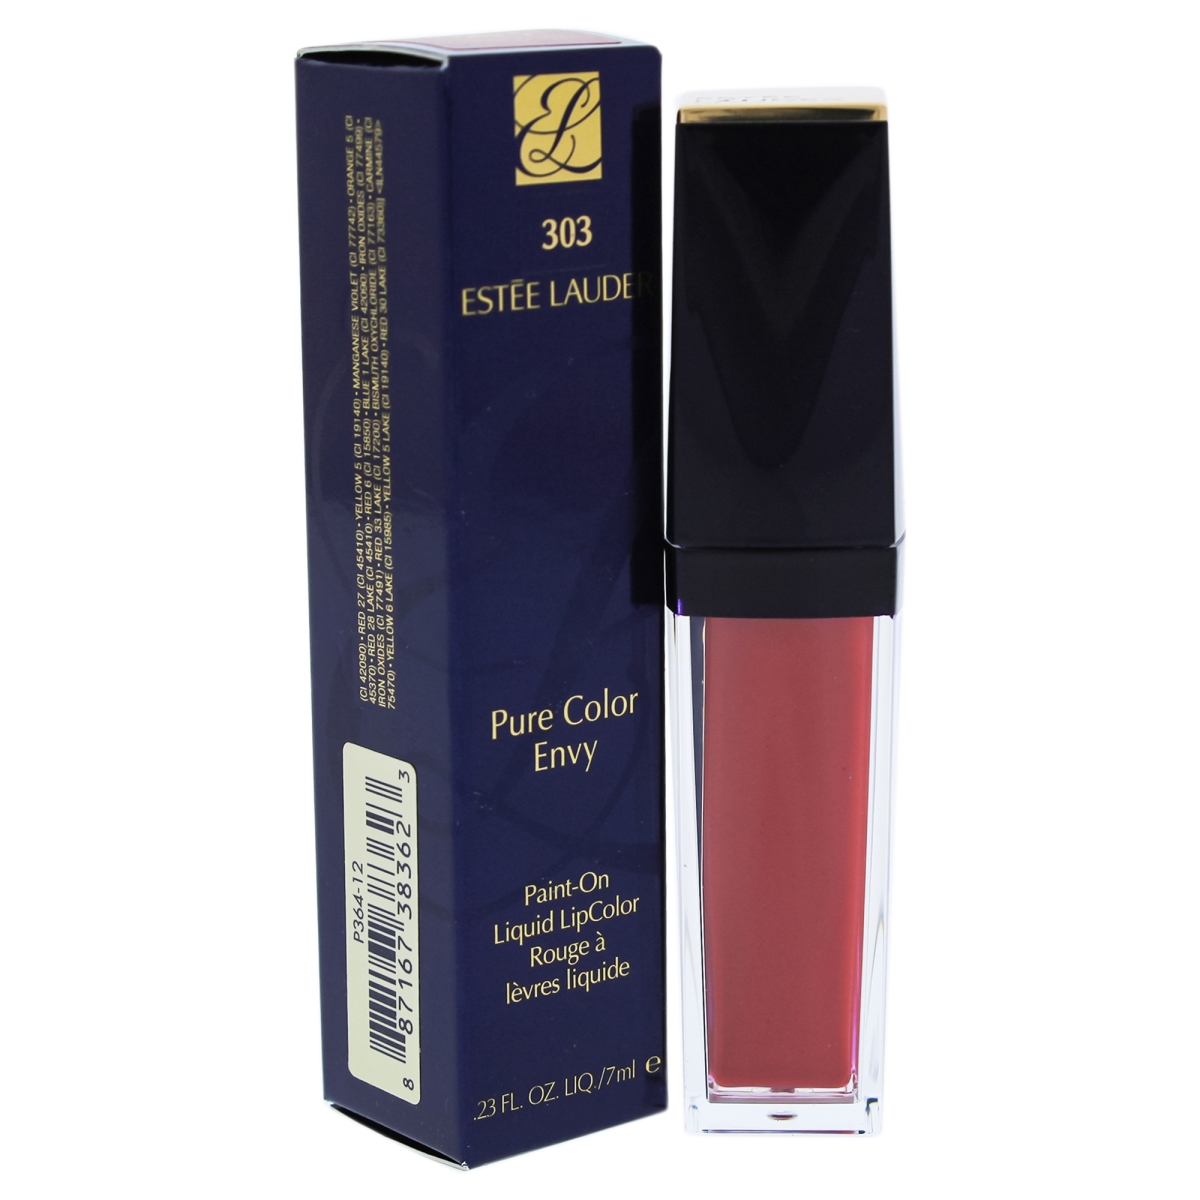 I0086334 0.23 Oz Pure Color Envy Paint-on Liquid Lip Color For Womens - 303 Controversial